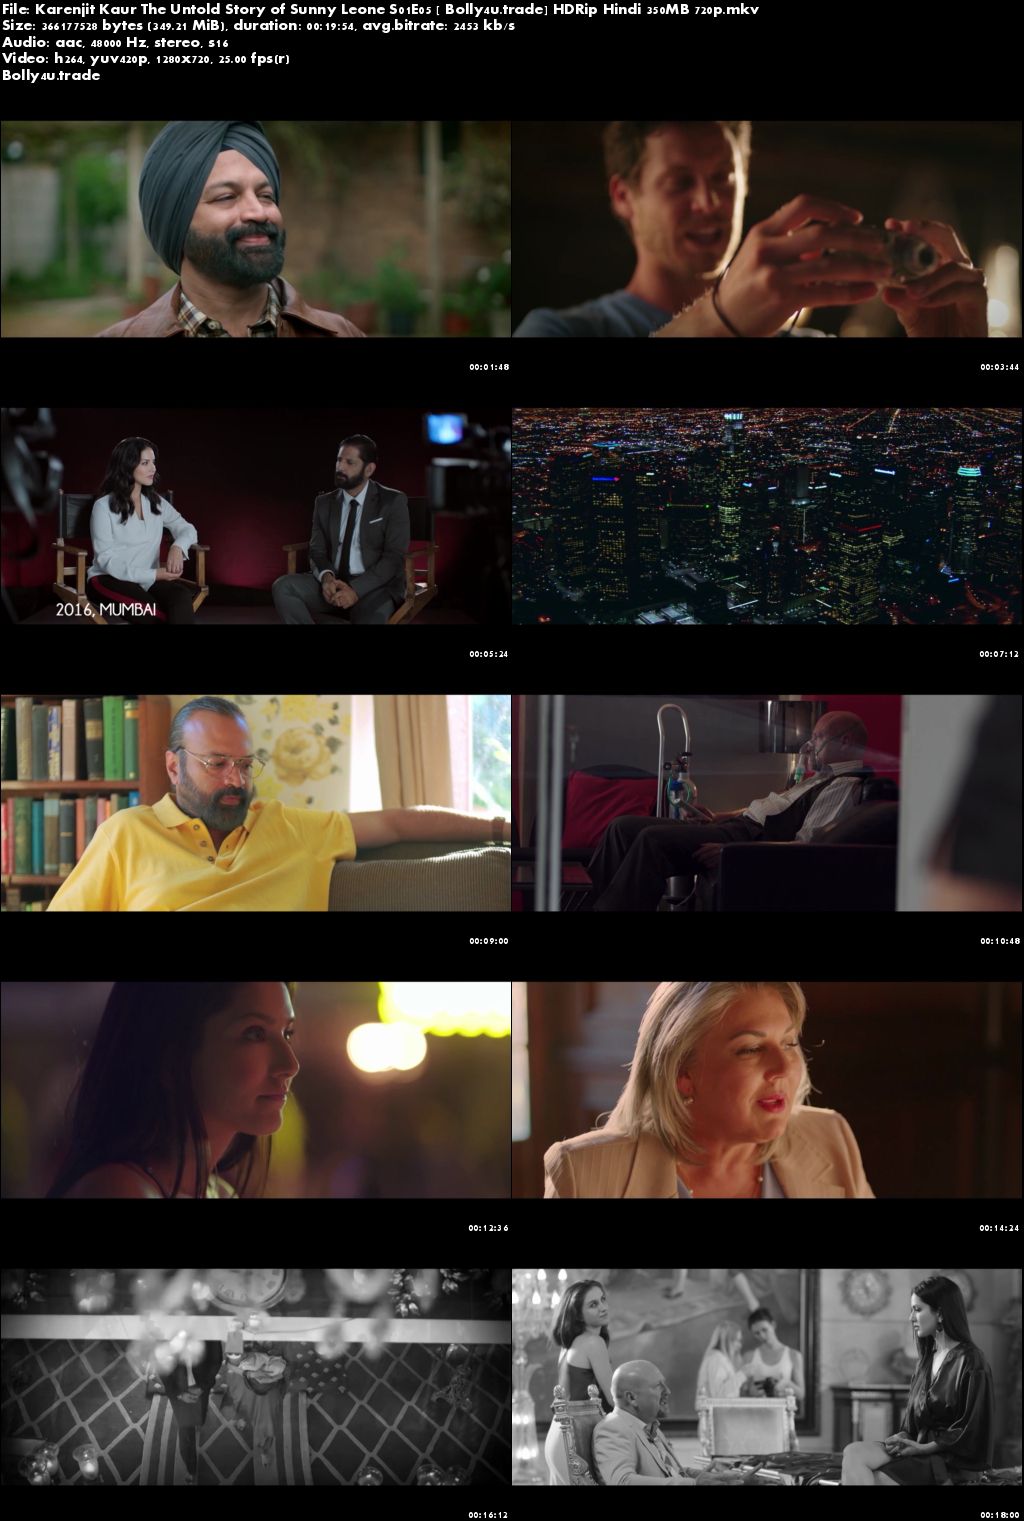 Karenjit Kaur The Untold Story of Sunny Leone S01E05 HDRip 350MB Hindi 720p Download